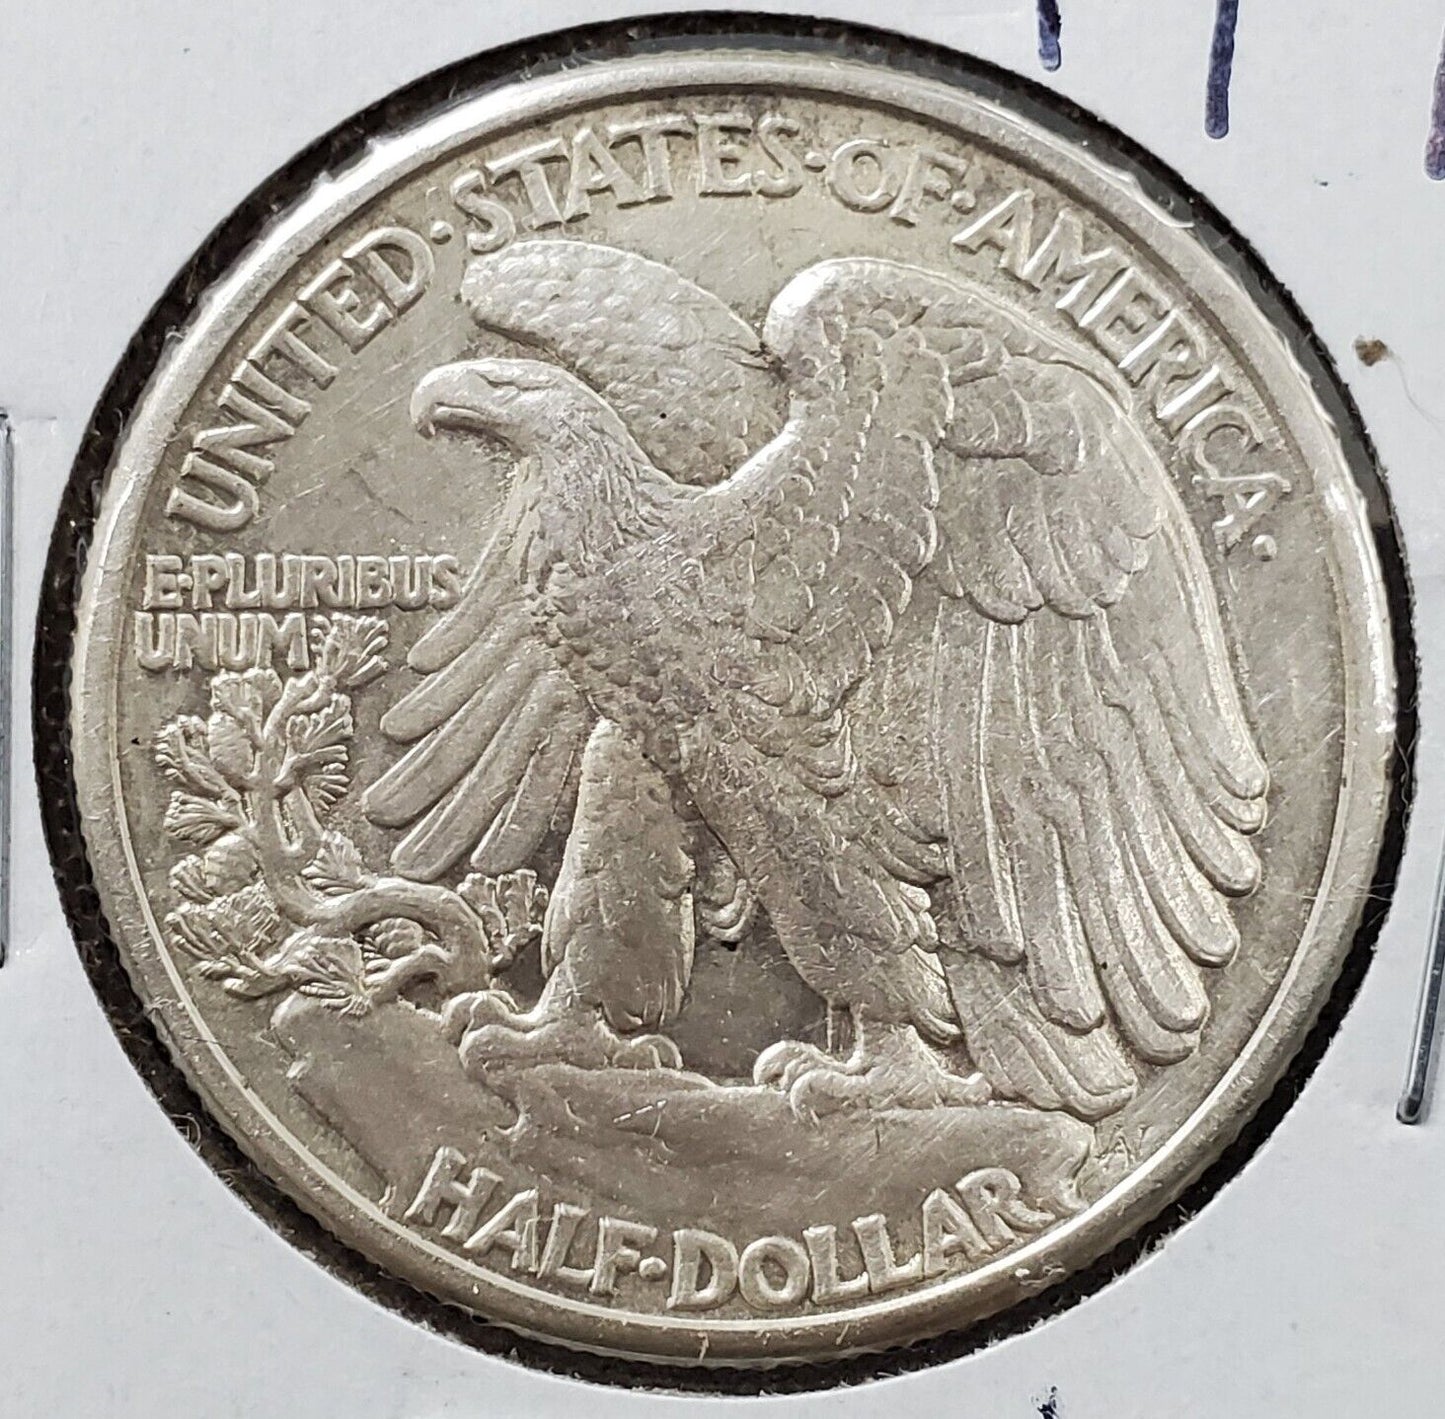 1942 P Walking Liberty Silver Eagle Half Dollar Coin AU Details FS-801